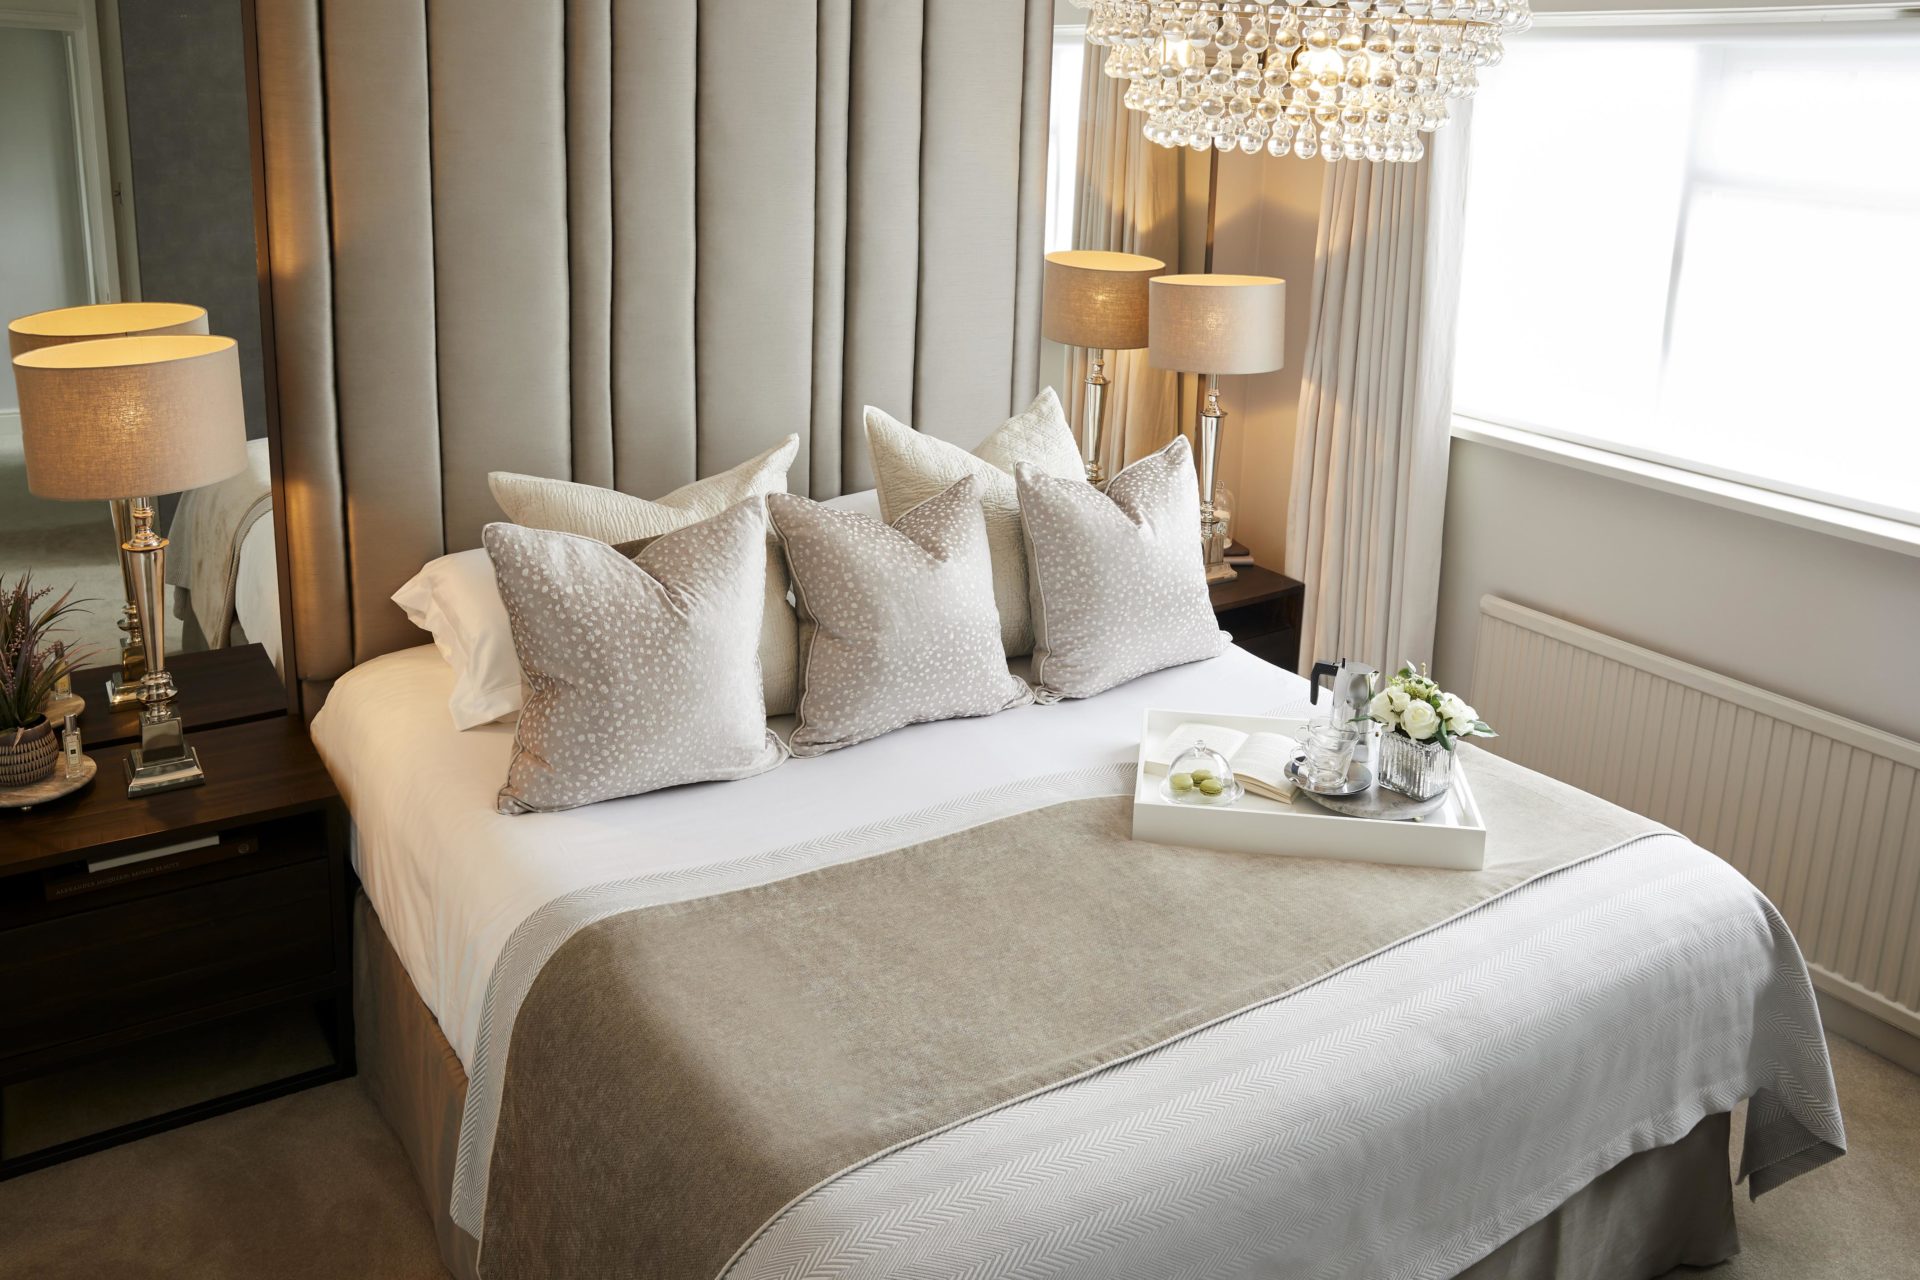 resort style bedroom furniture